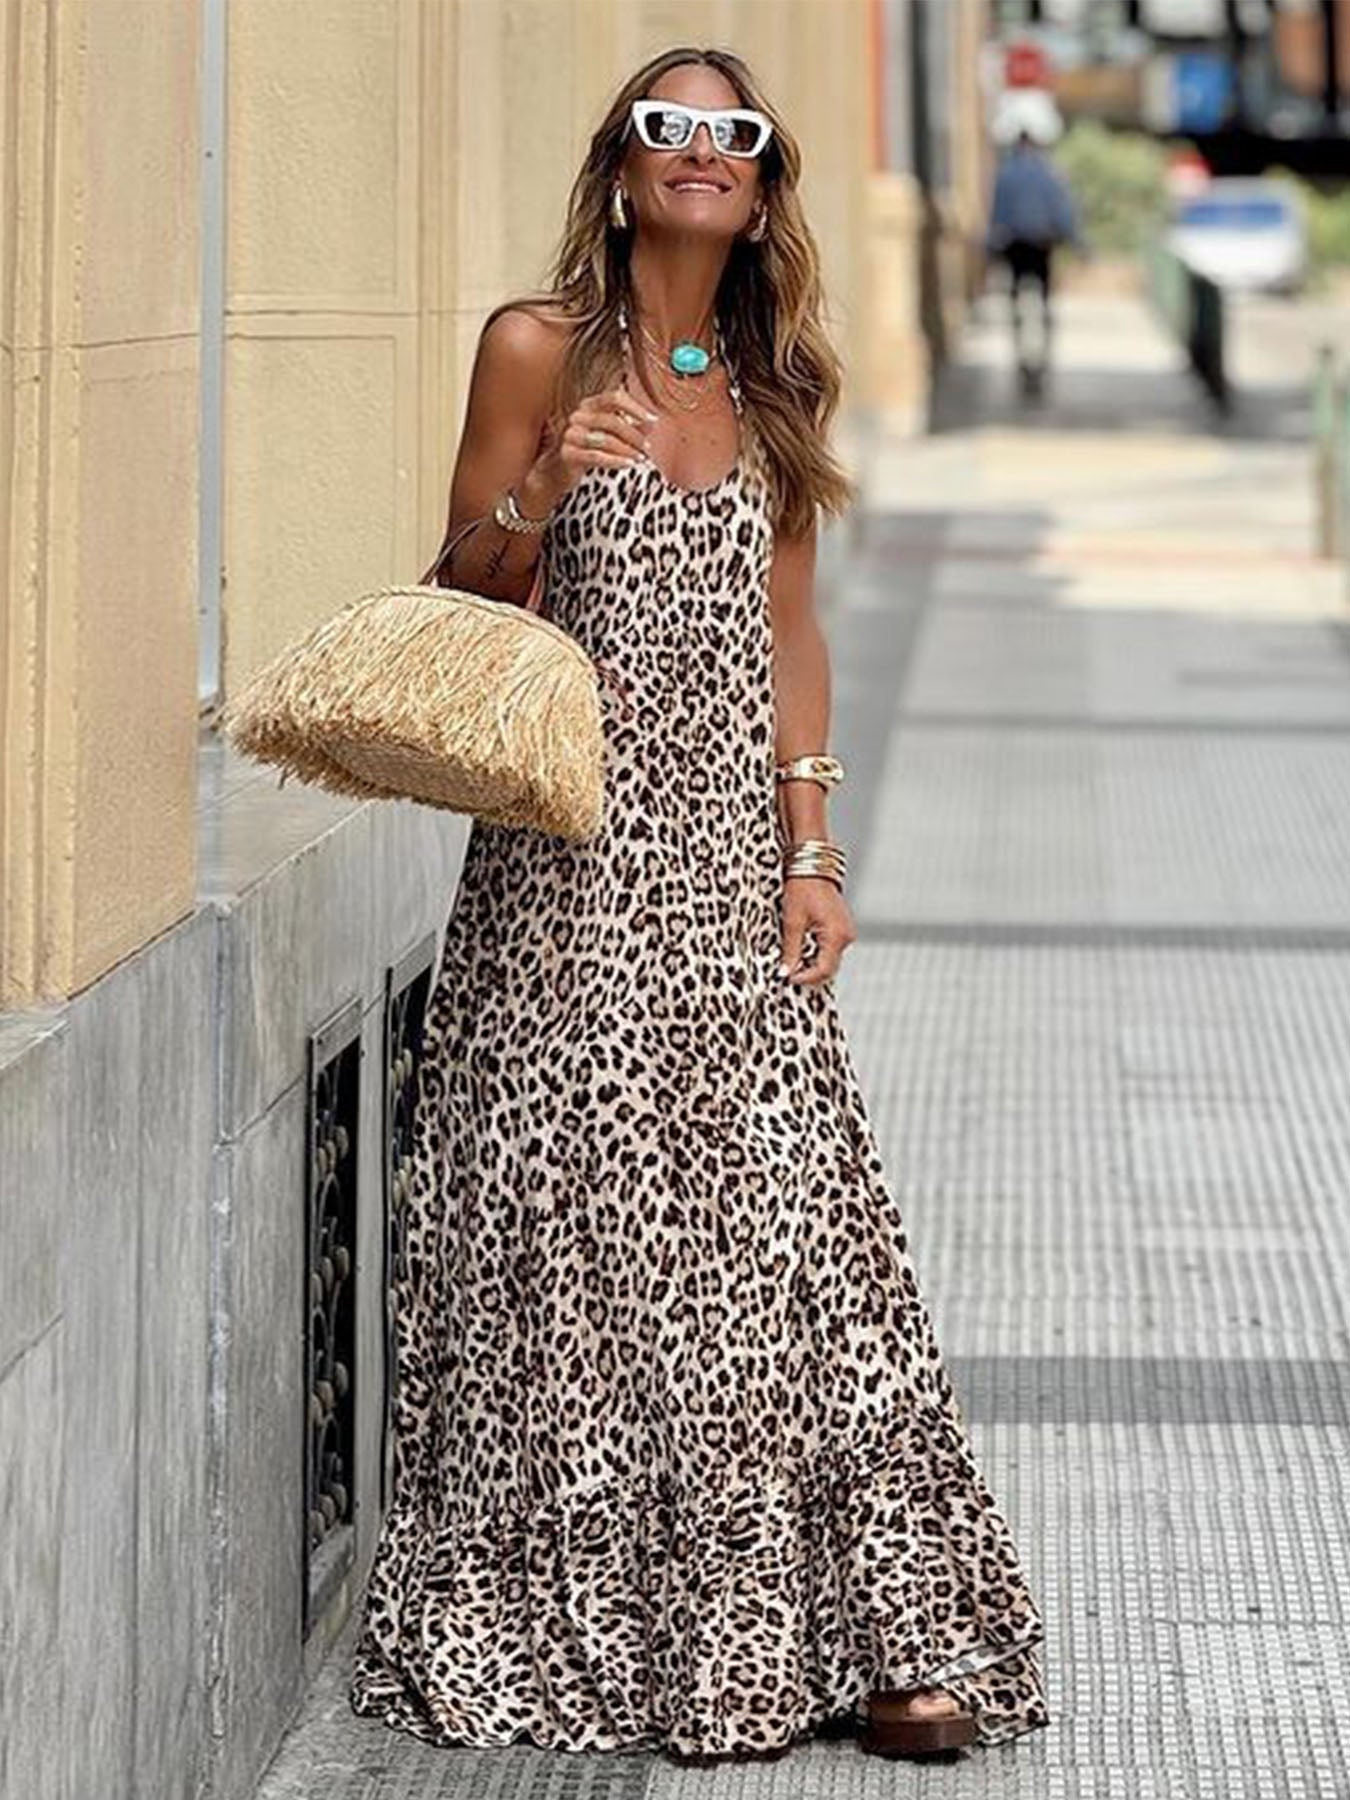 Vorioal Leopard Sexy Dress